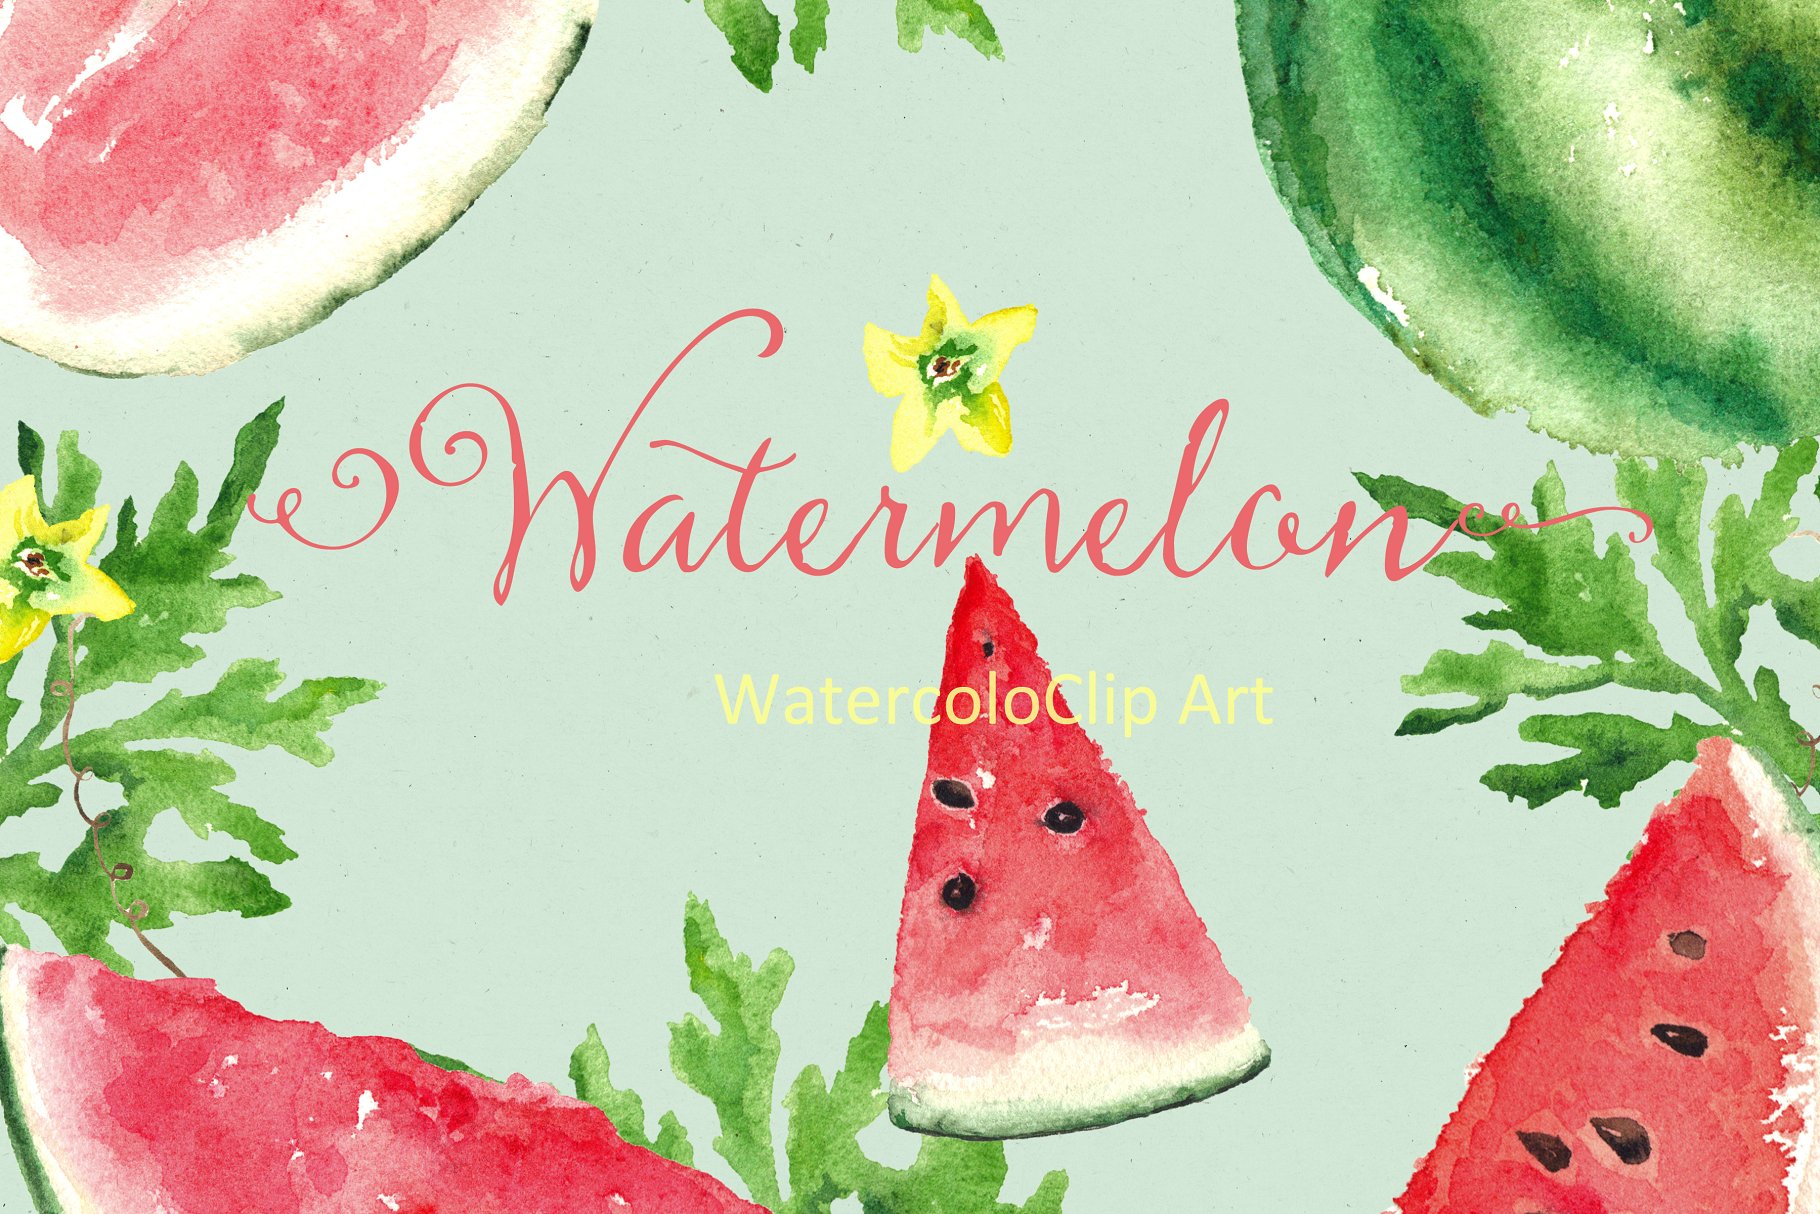 西瓜水彩剪贴画素材 Watermelon watercolor clipart插图(1)